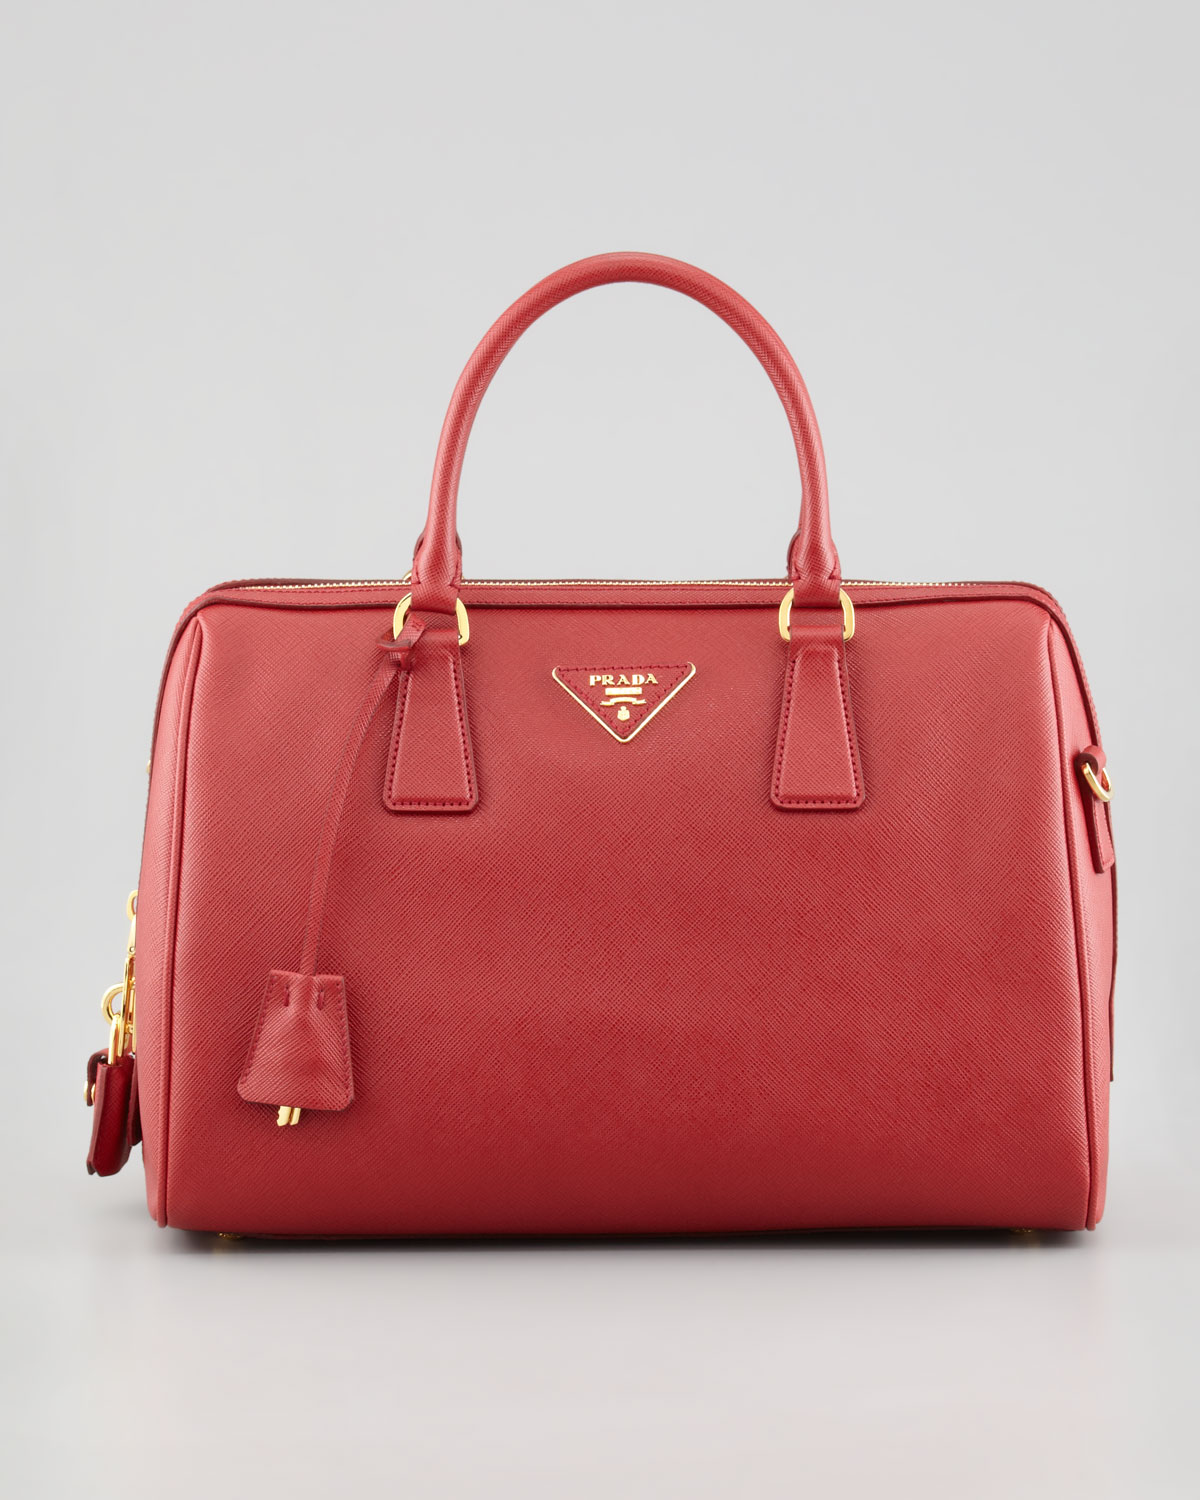 Lyst - Prada Saffiano Bowler Bag in Red